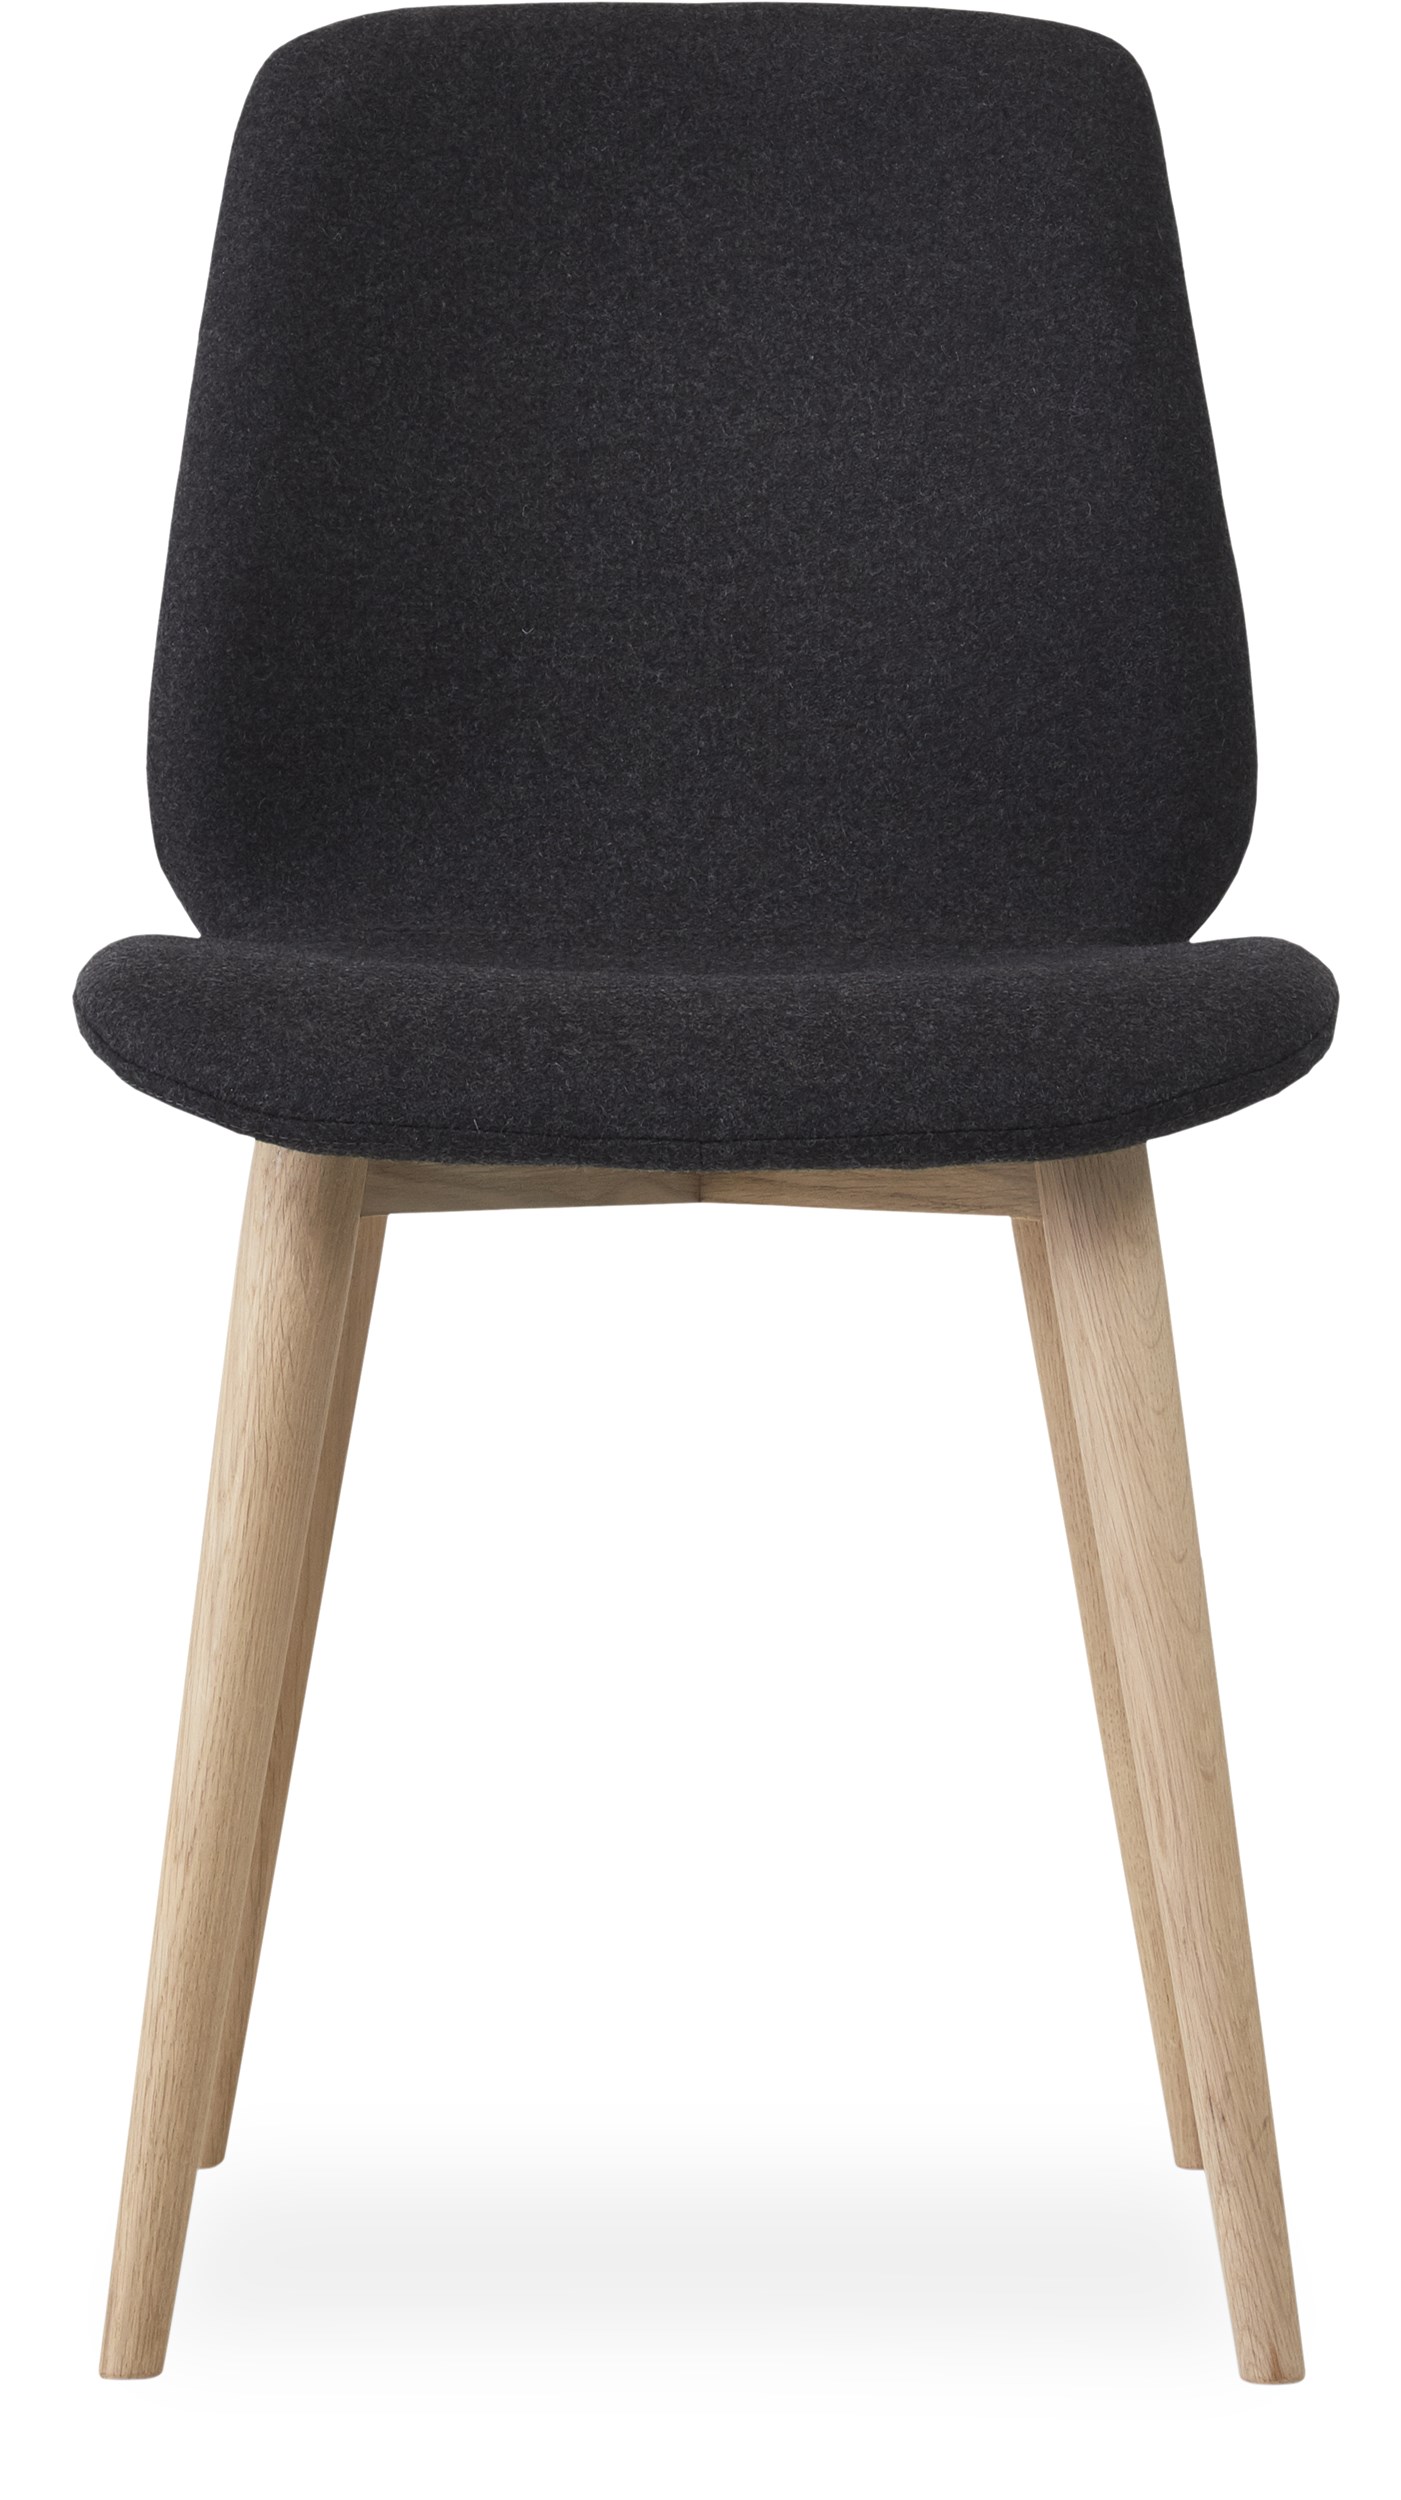 Share matstol - Sits i 24 Dusty charcoal filt och curveben i vitpigmenterad mattlackad ek